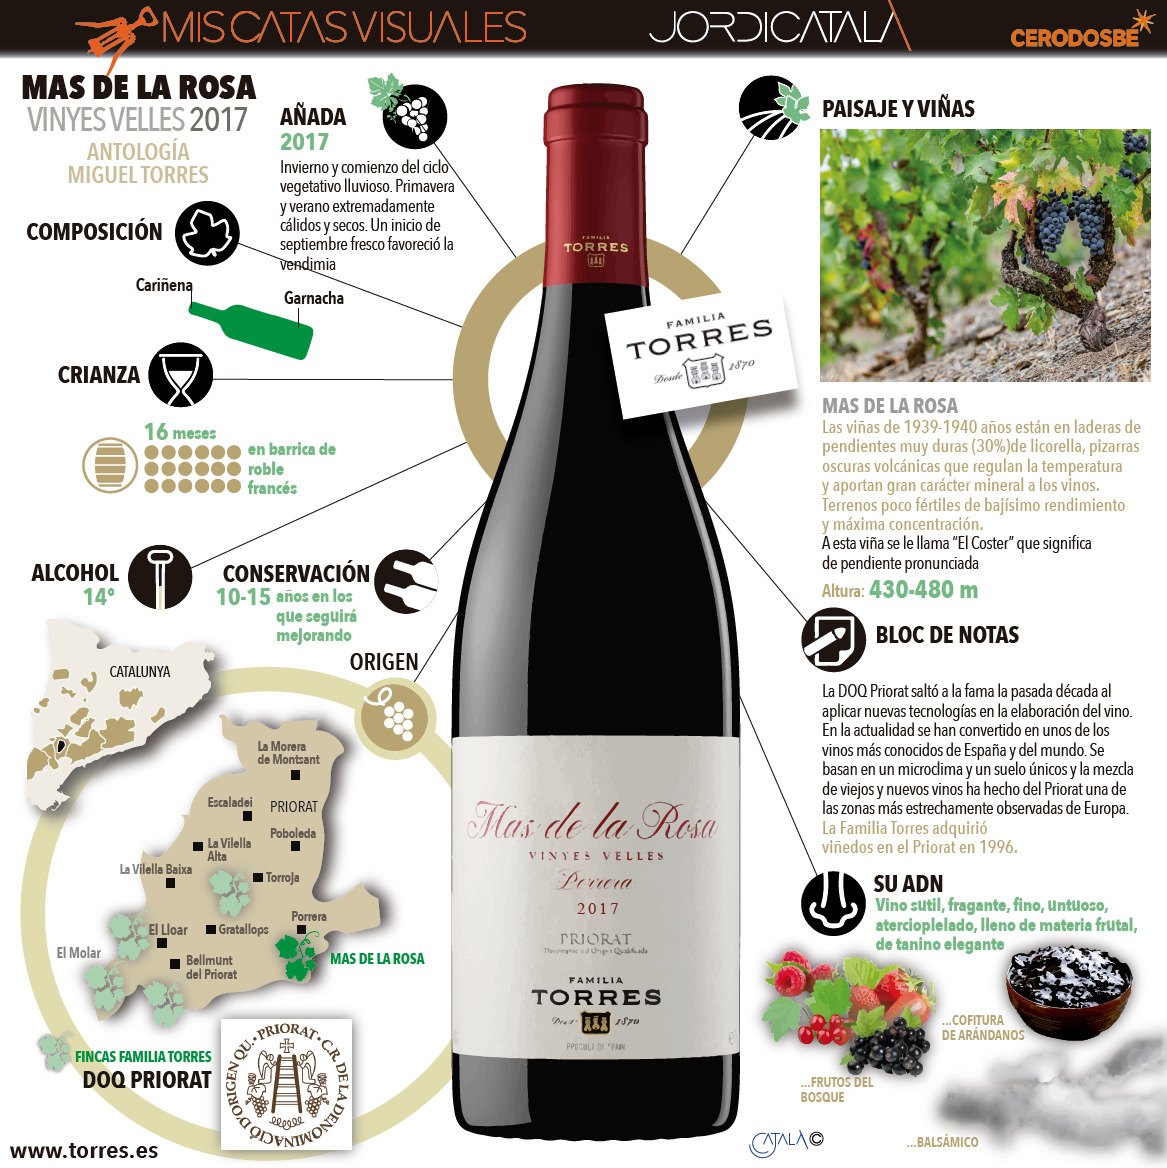 El vino Vinyes Velles de Mas de la Rosa es un vino sutil y fragante. InfografÃ­a: Jordi CatalÃ 